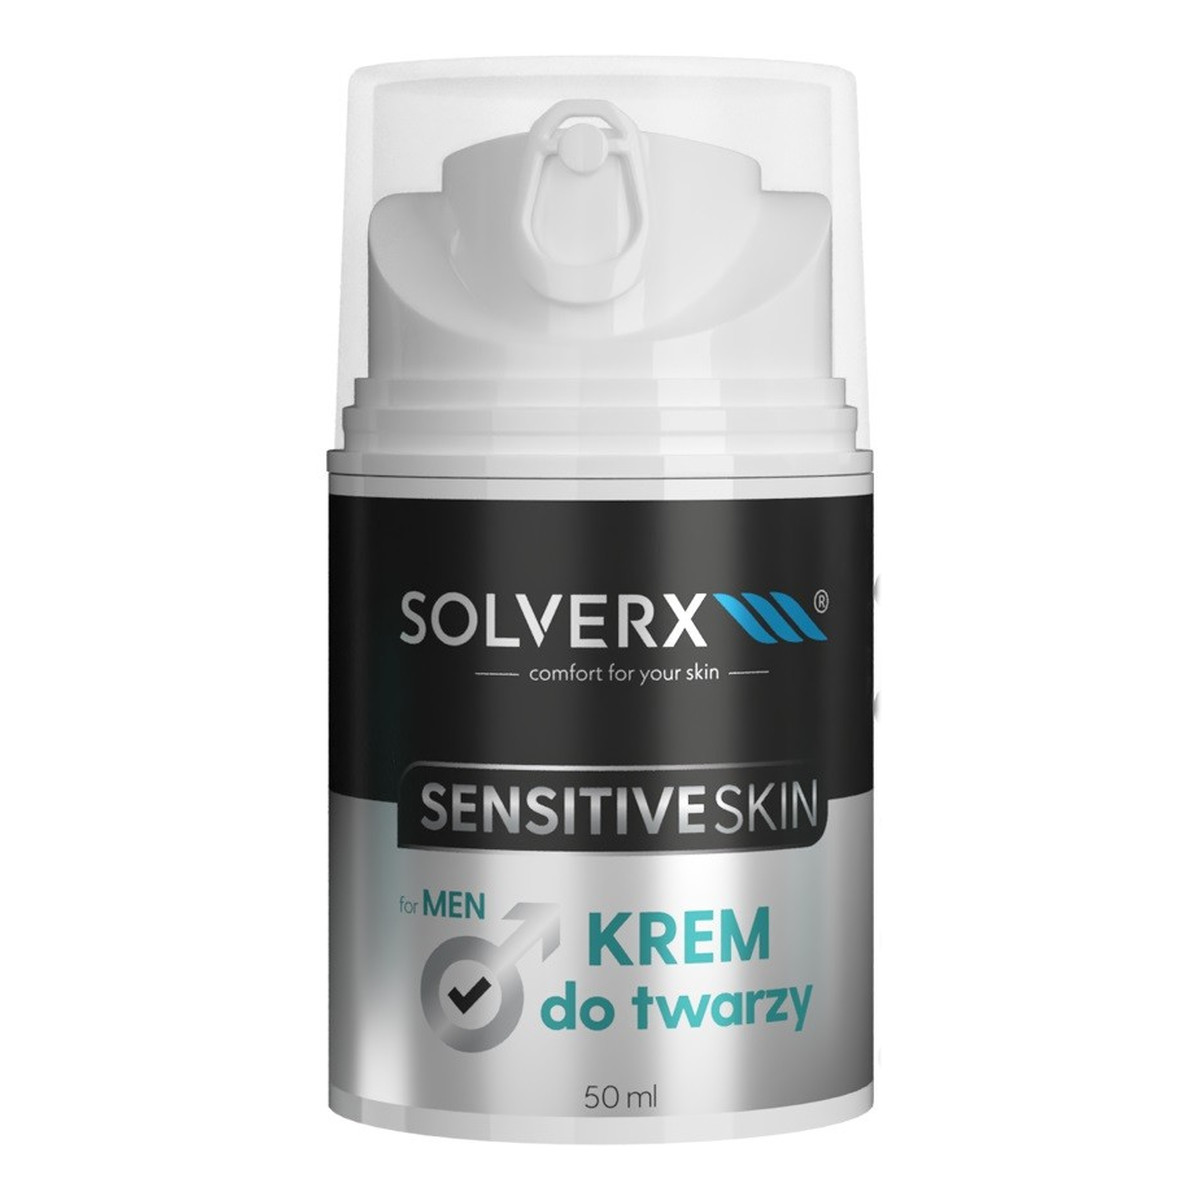 Solverx Sensitive Skin Men Krem do twarzy 50ml